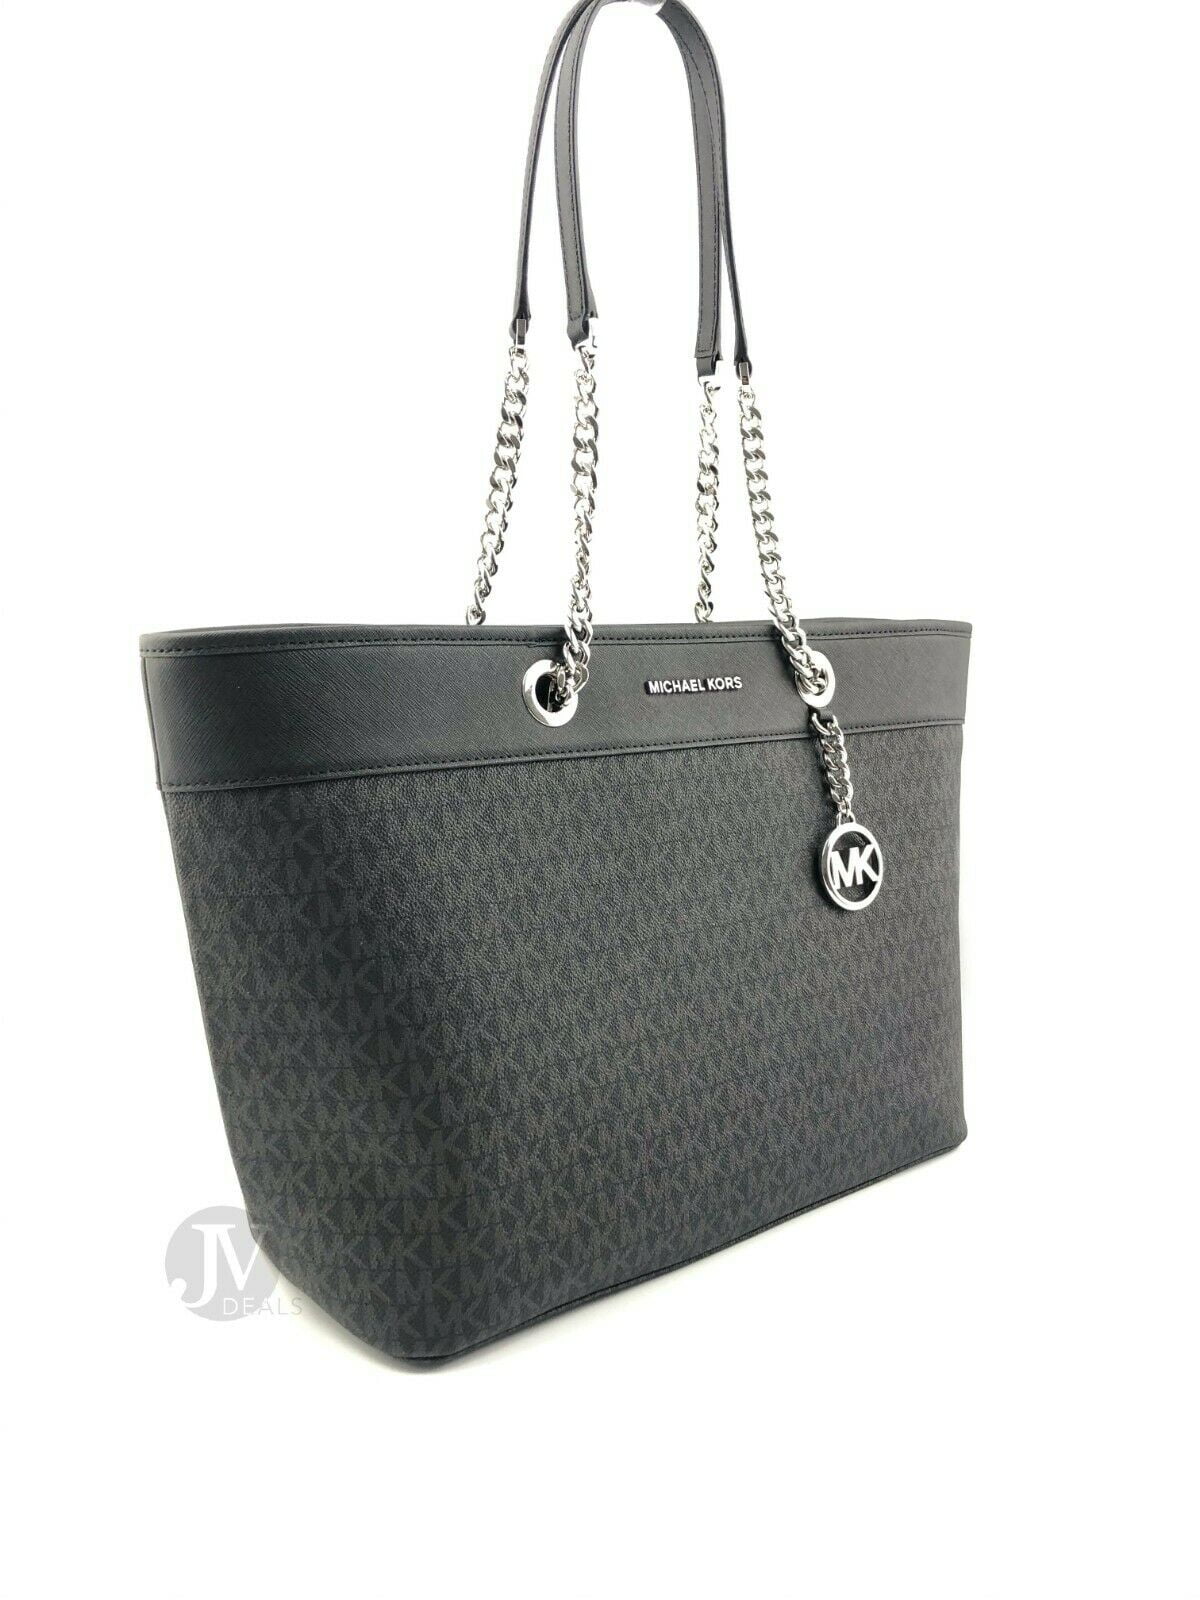 Michael Kors Shania Large East West Chain Leather Tote Handbag Bag in Black